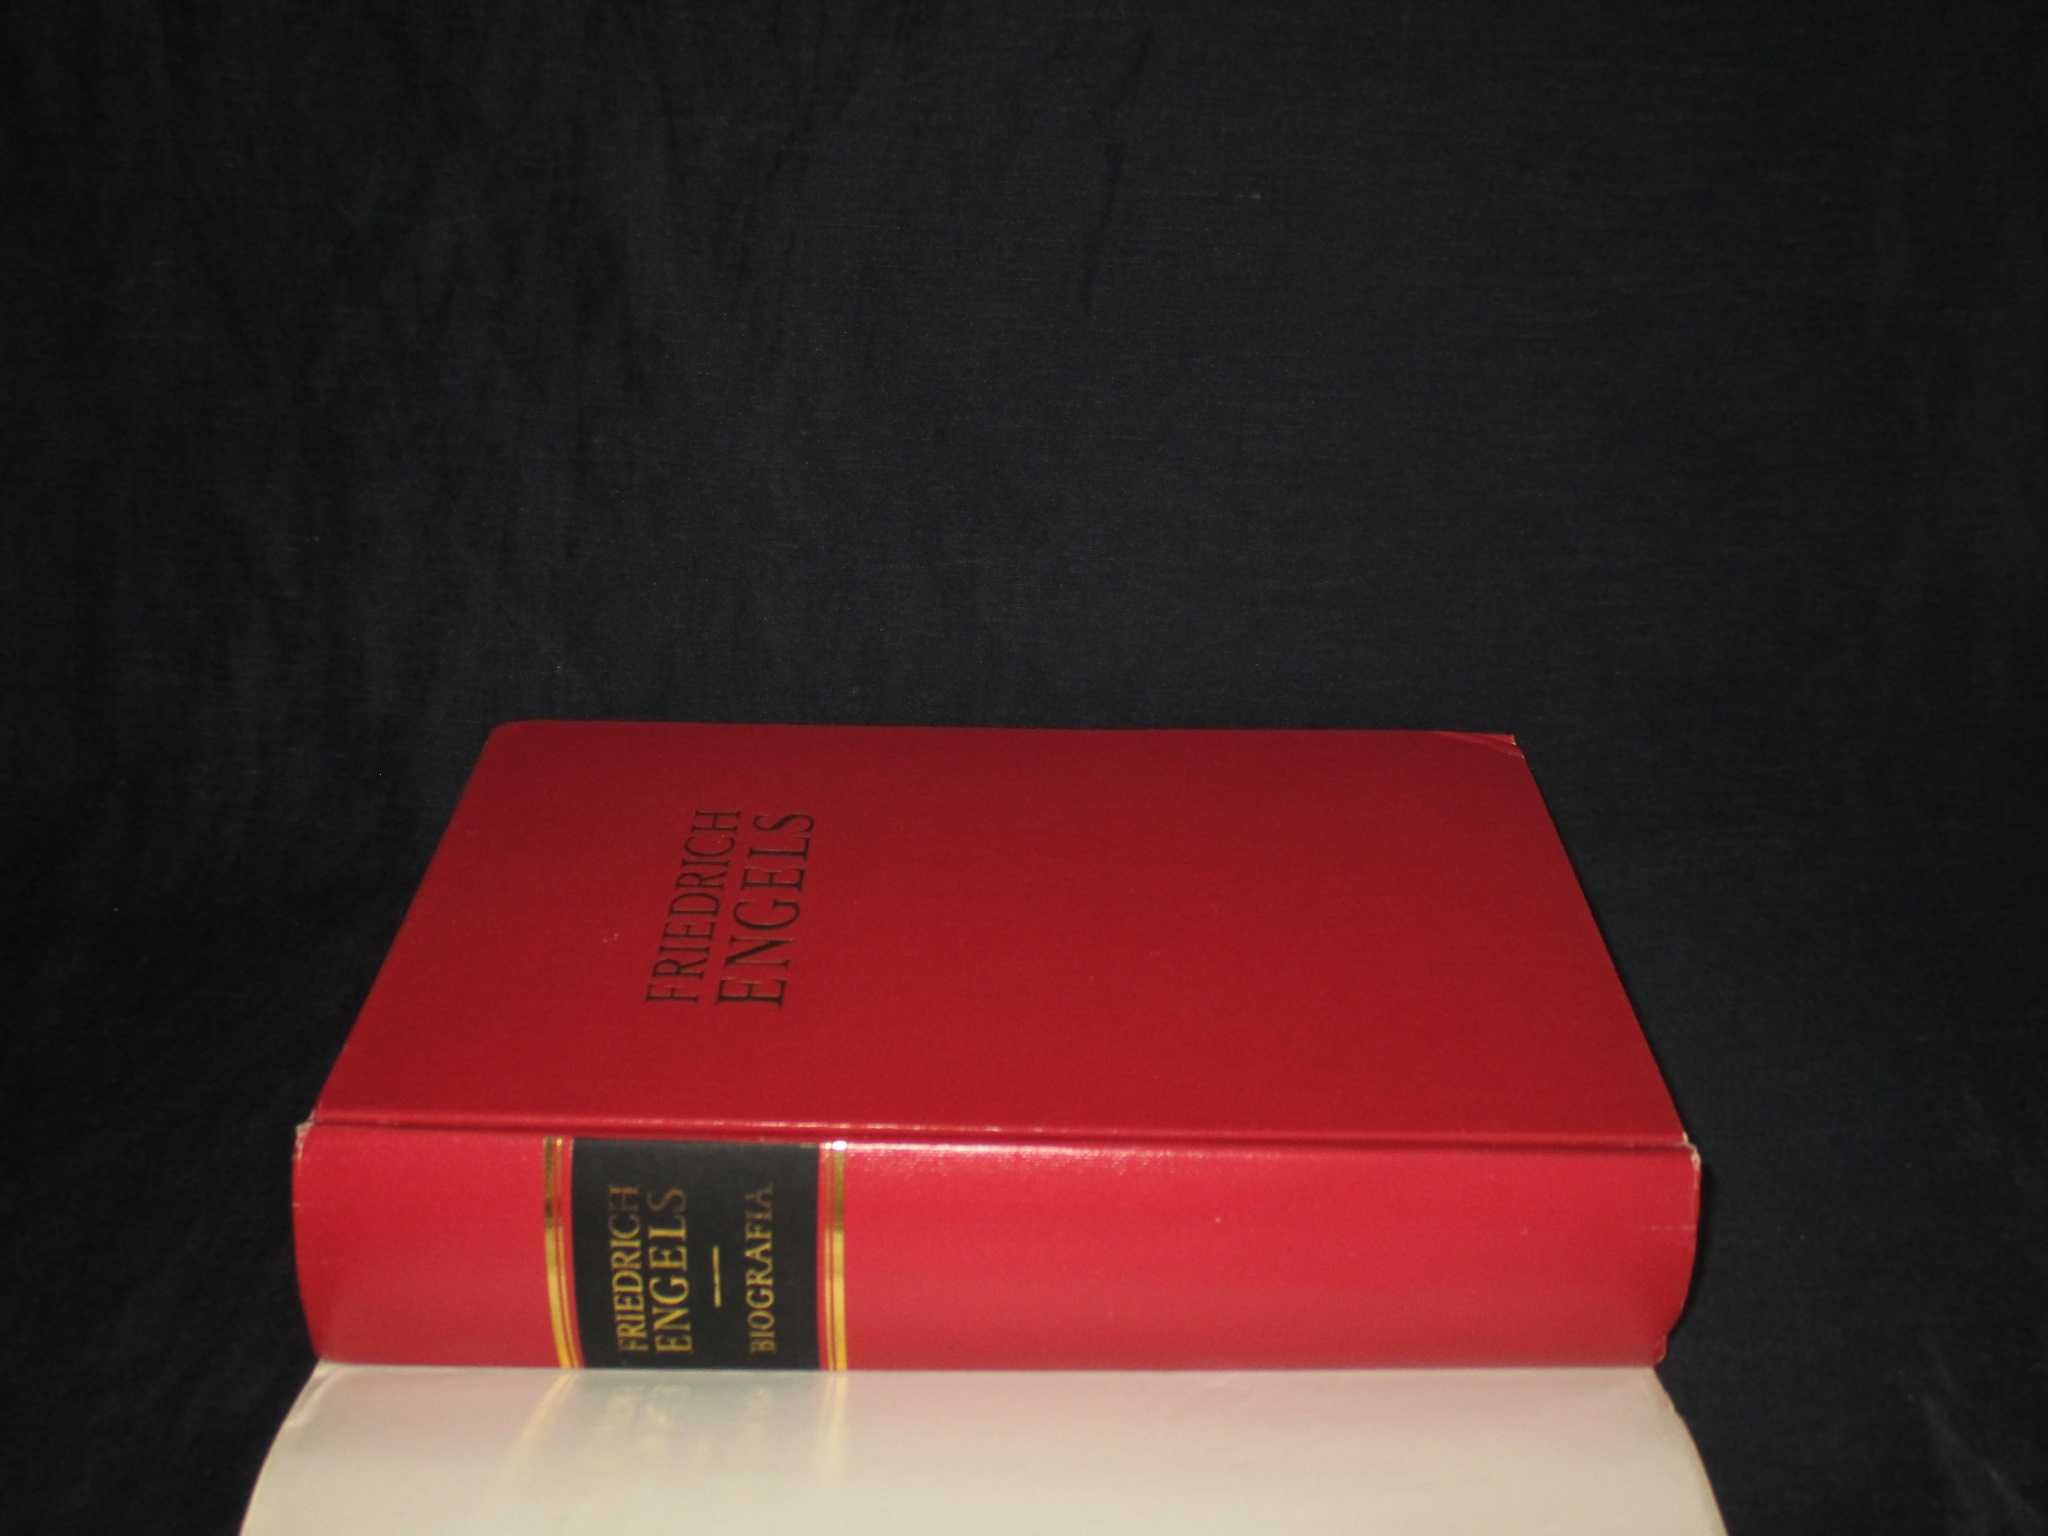 Livro Friedrich Engels Biografia Avante 1986